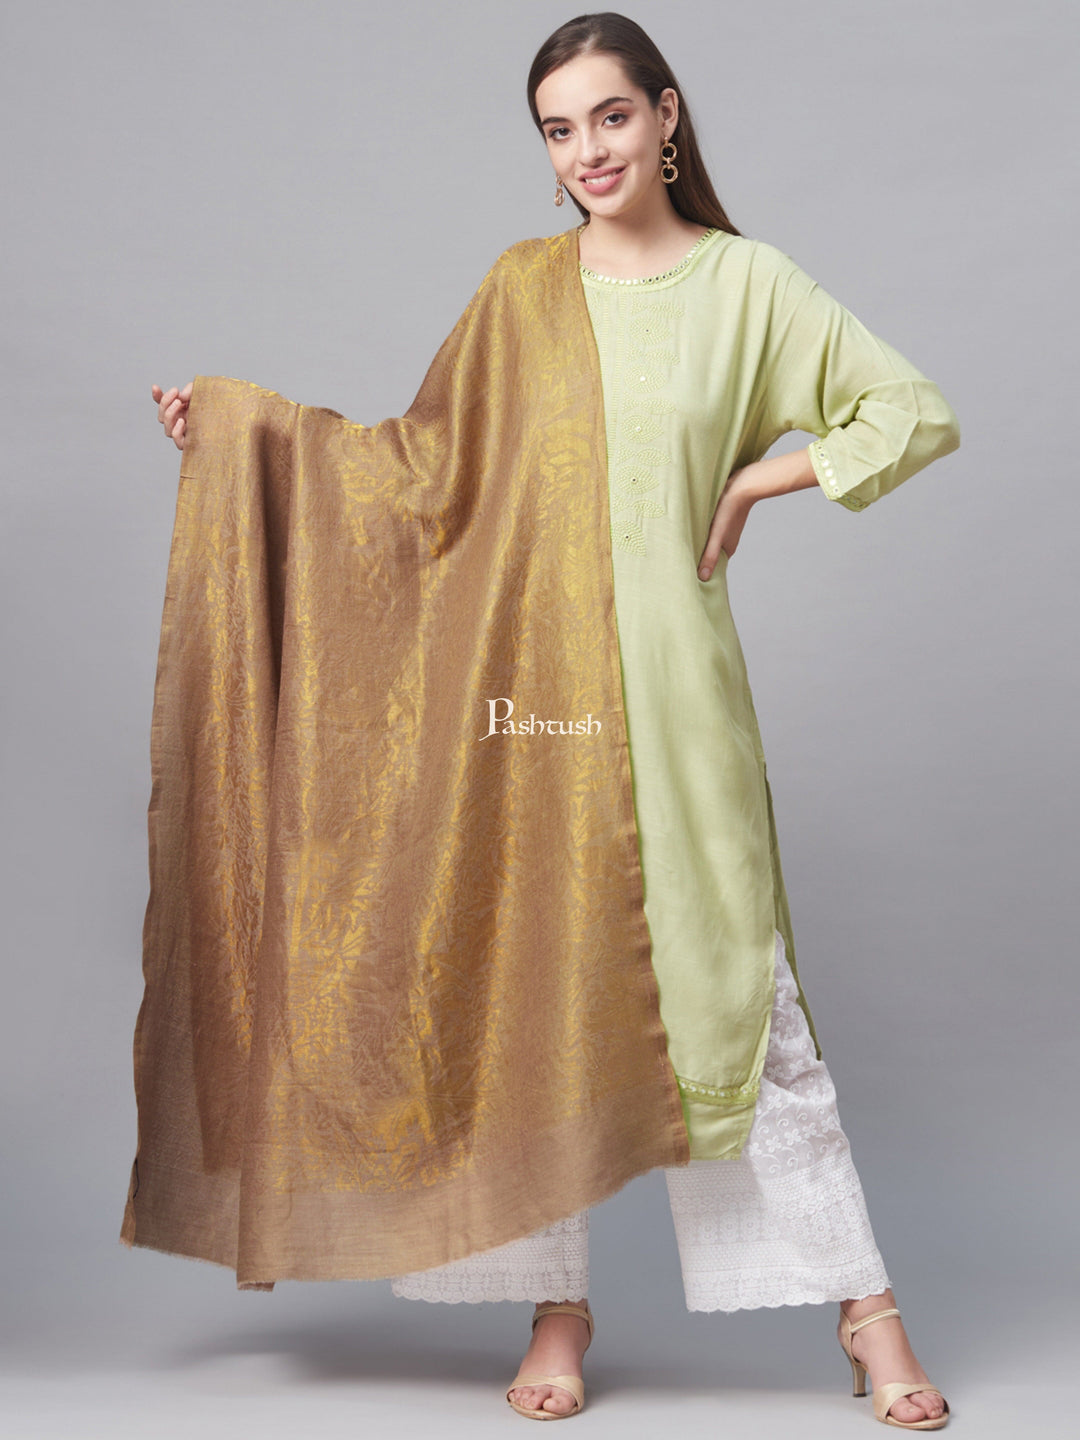 Pashtush India Womens Shawls Pashtush Womens Twilight Collection, Jacquard Shawl, With Metallic Thread Weave, Fine Wool